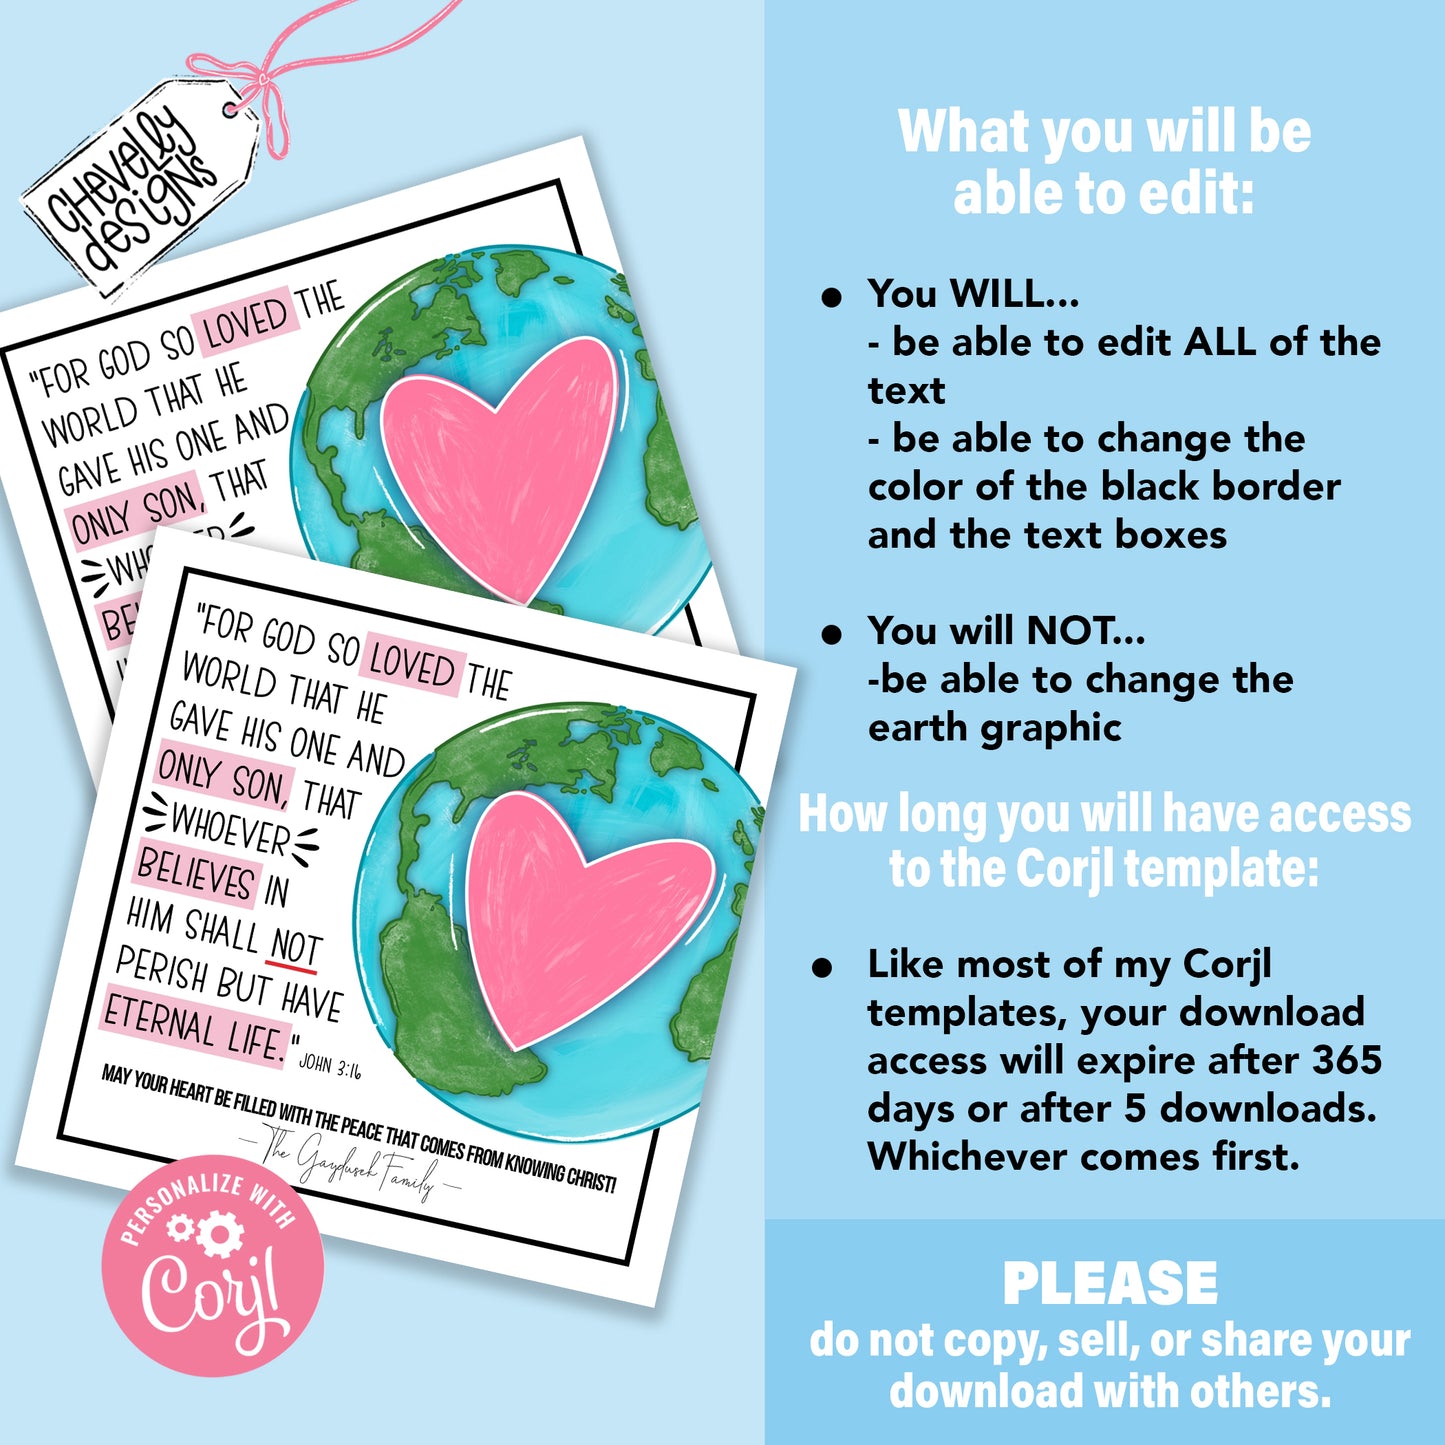 Editable - For God so Loved the World - John 3:16 - Religious Faith Based Gift Tags - Printable Digital File